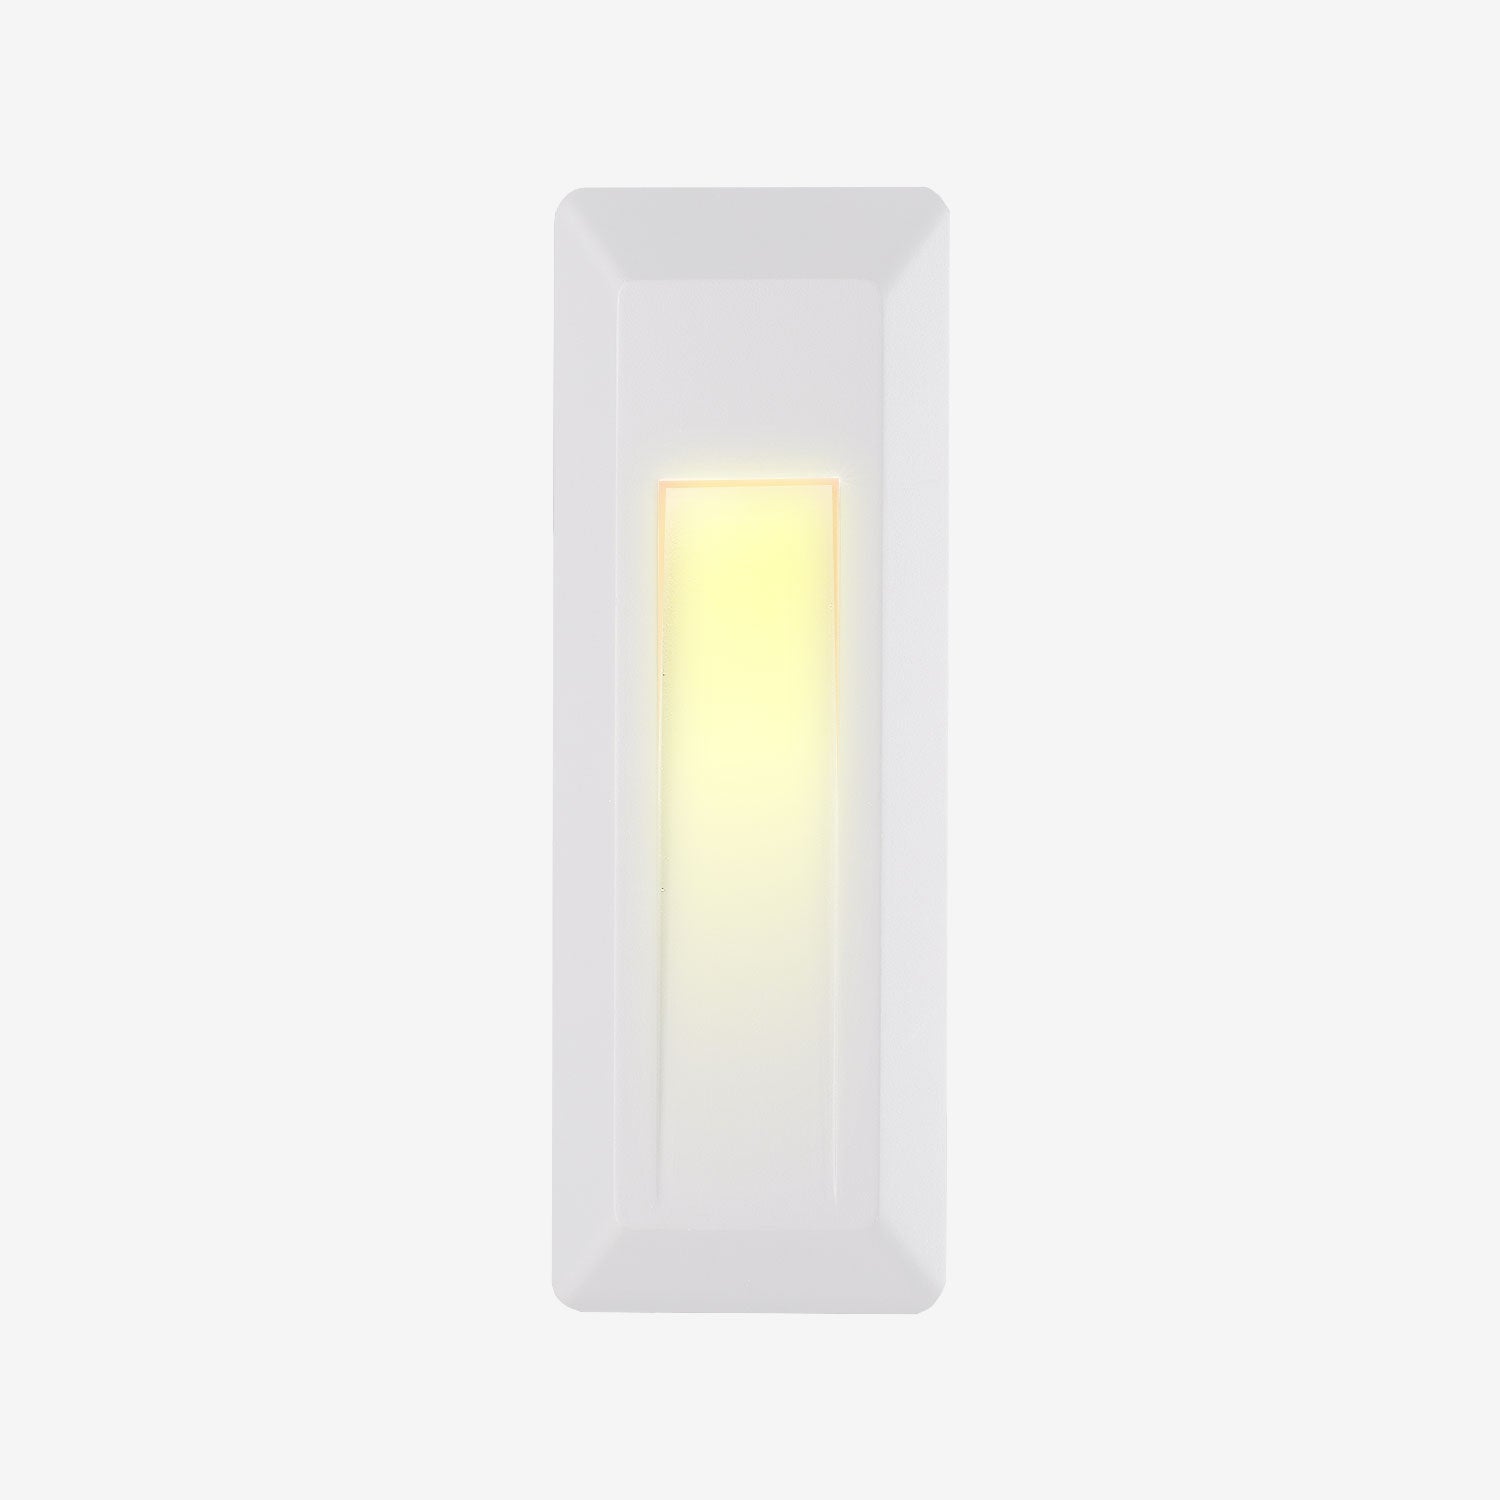 Luminaria LED para sobreponer en muro arbotante, de uso en exterior Modelo ML-7401 Illux